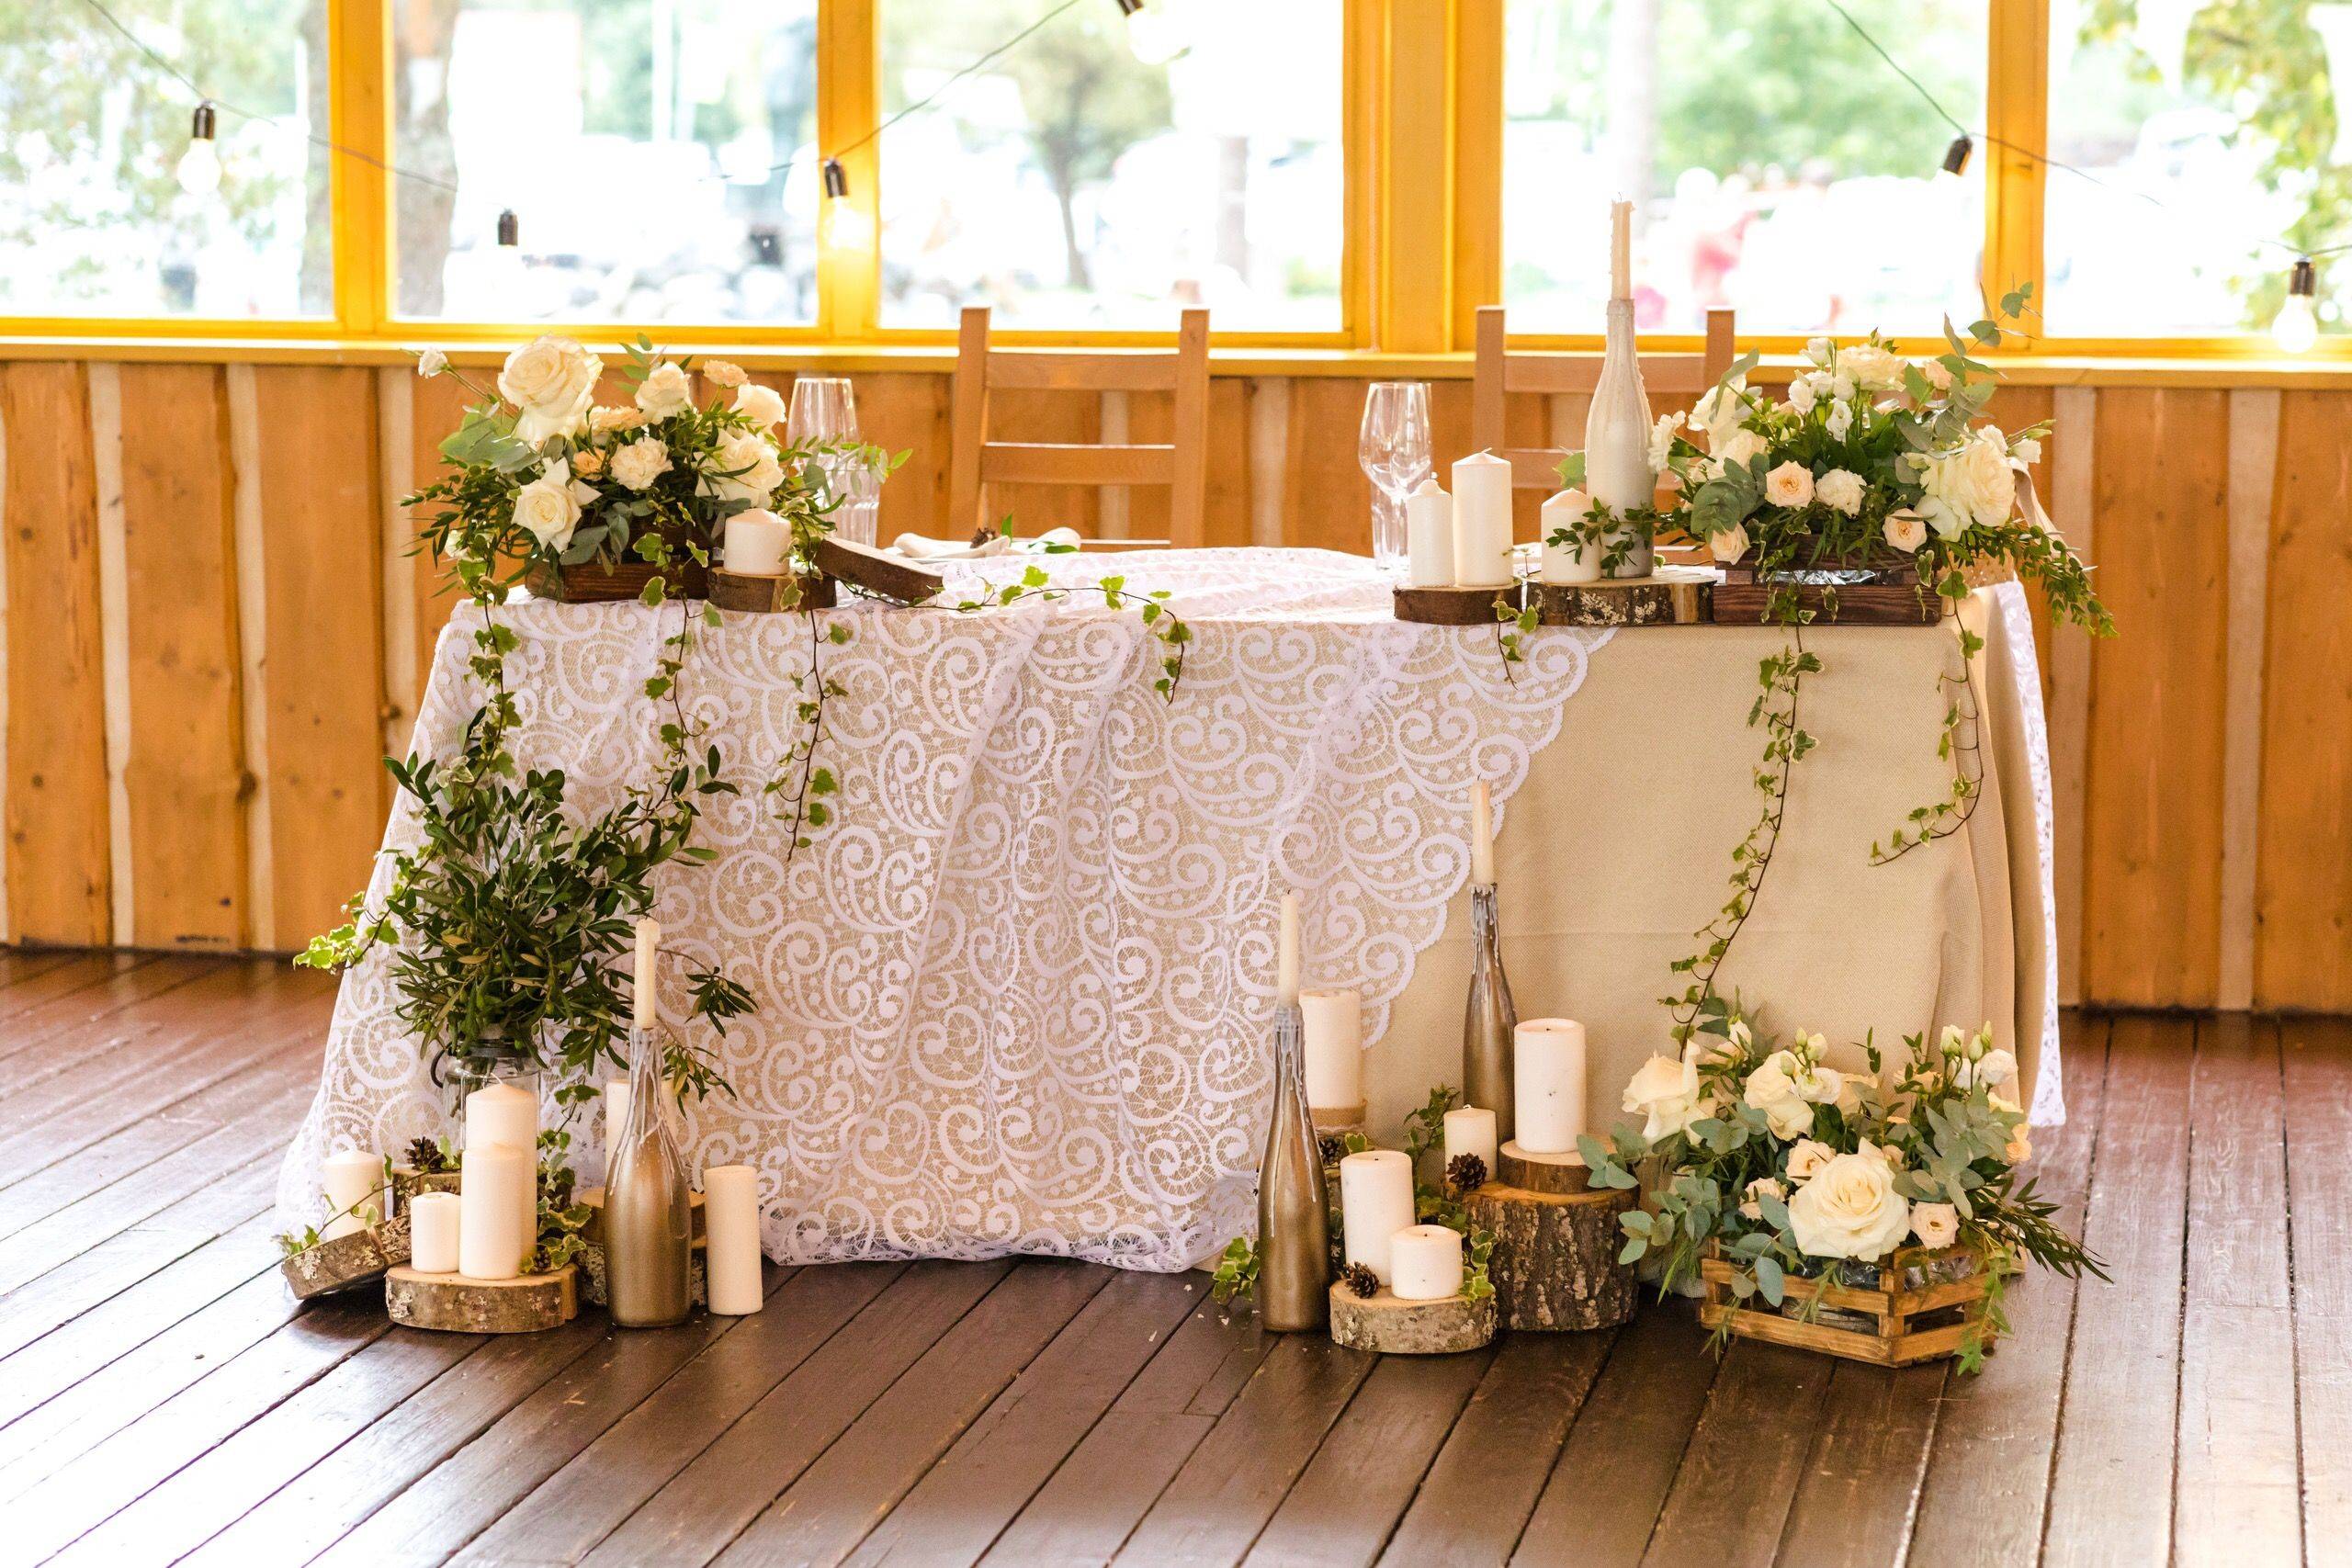 Свадьба в стиле рустика своими руками - оформление зала и стола